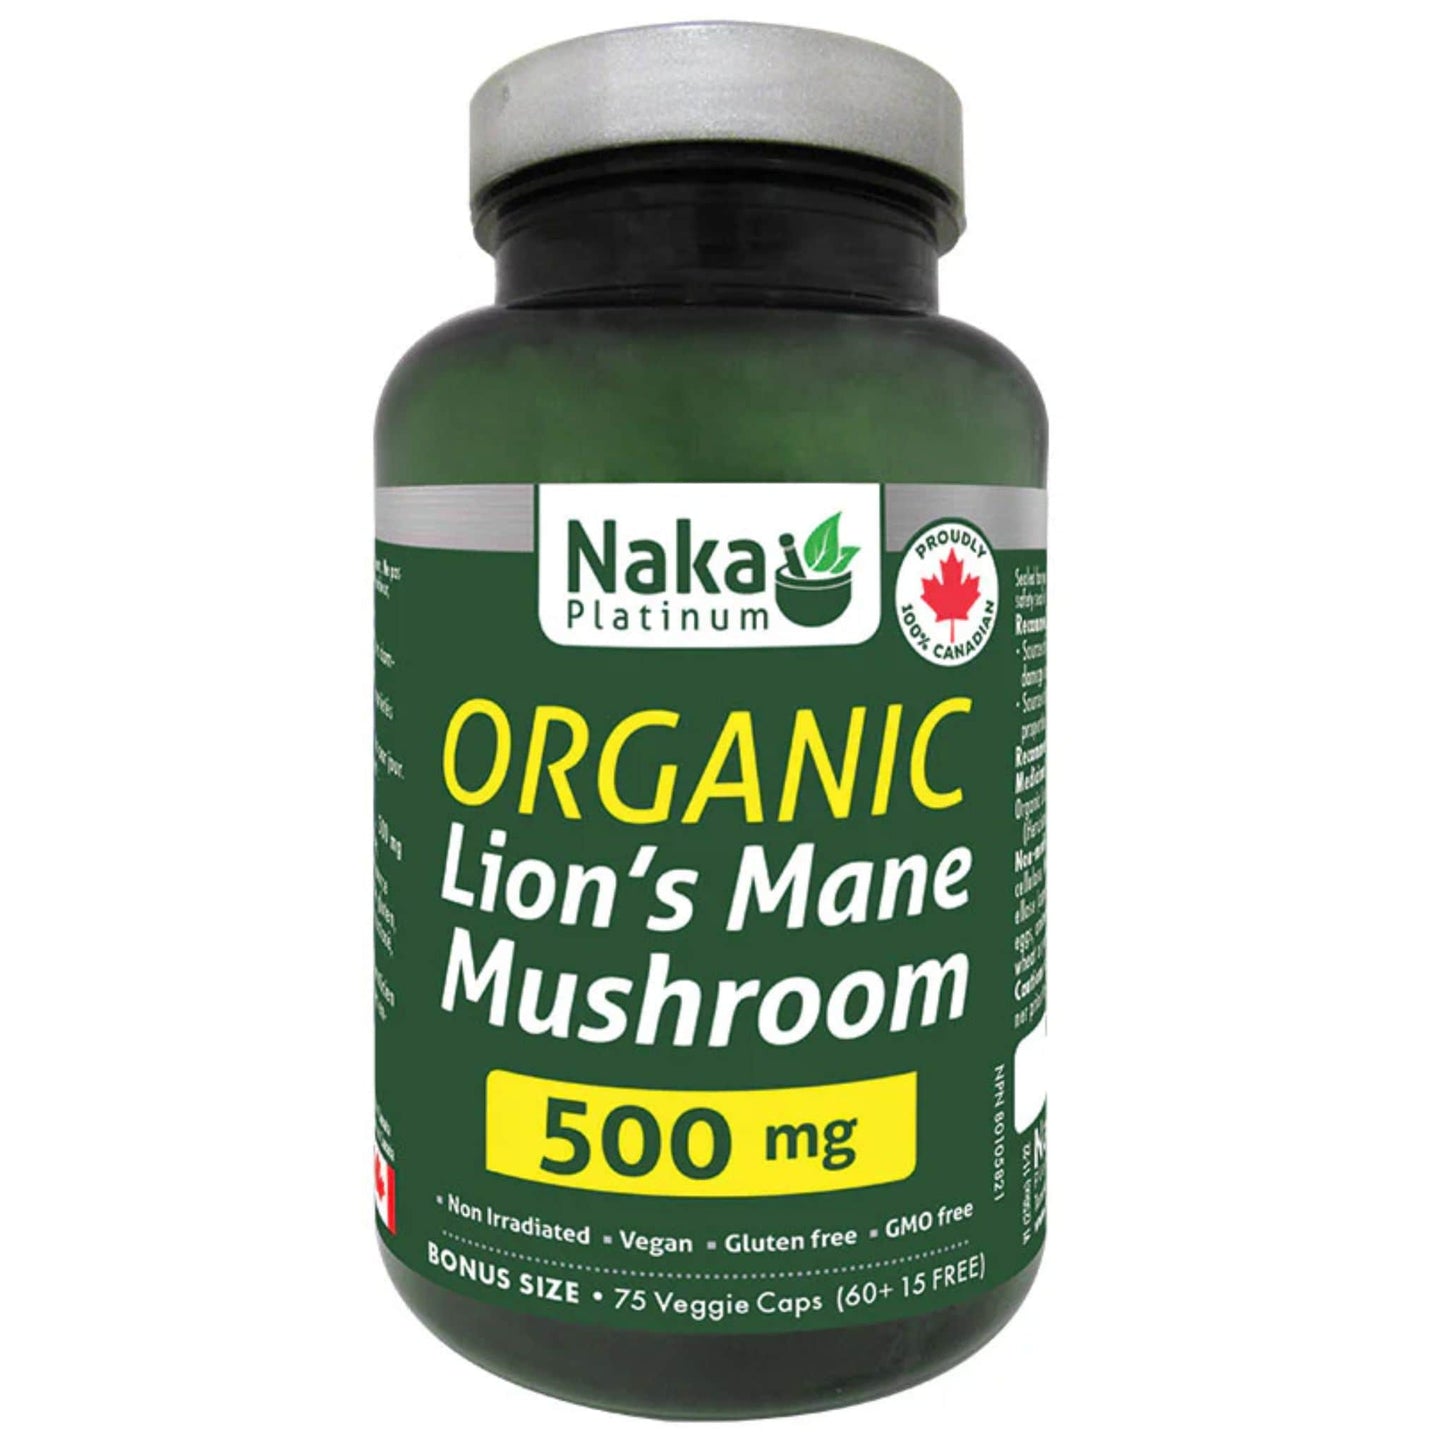 Naka Platinum Organic Lion's Mane 500mg, 75 Vegetable Capsules